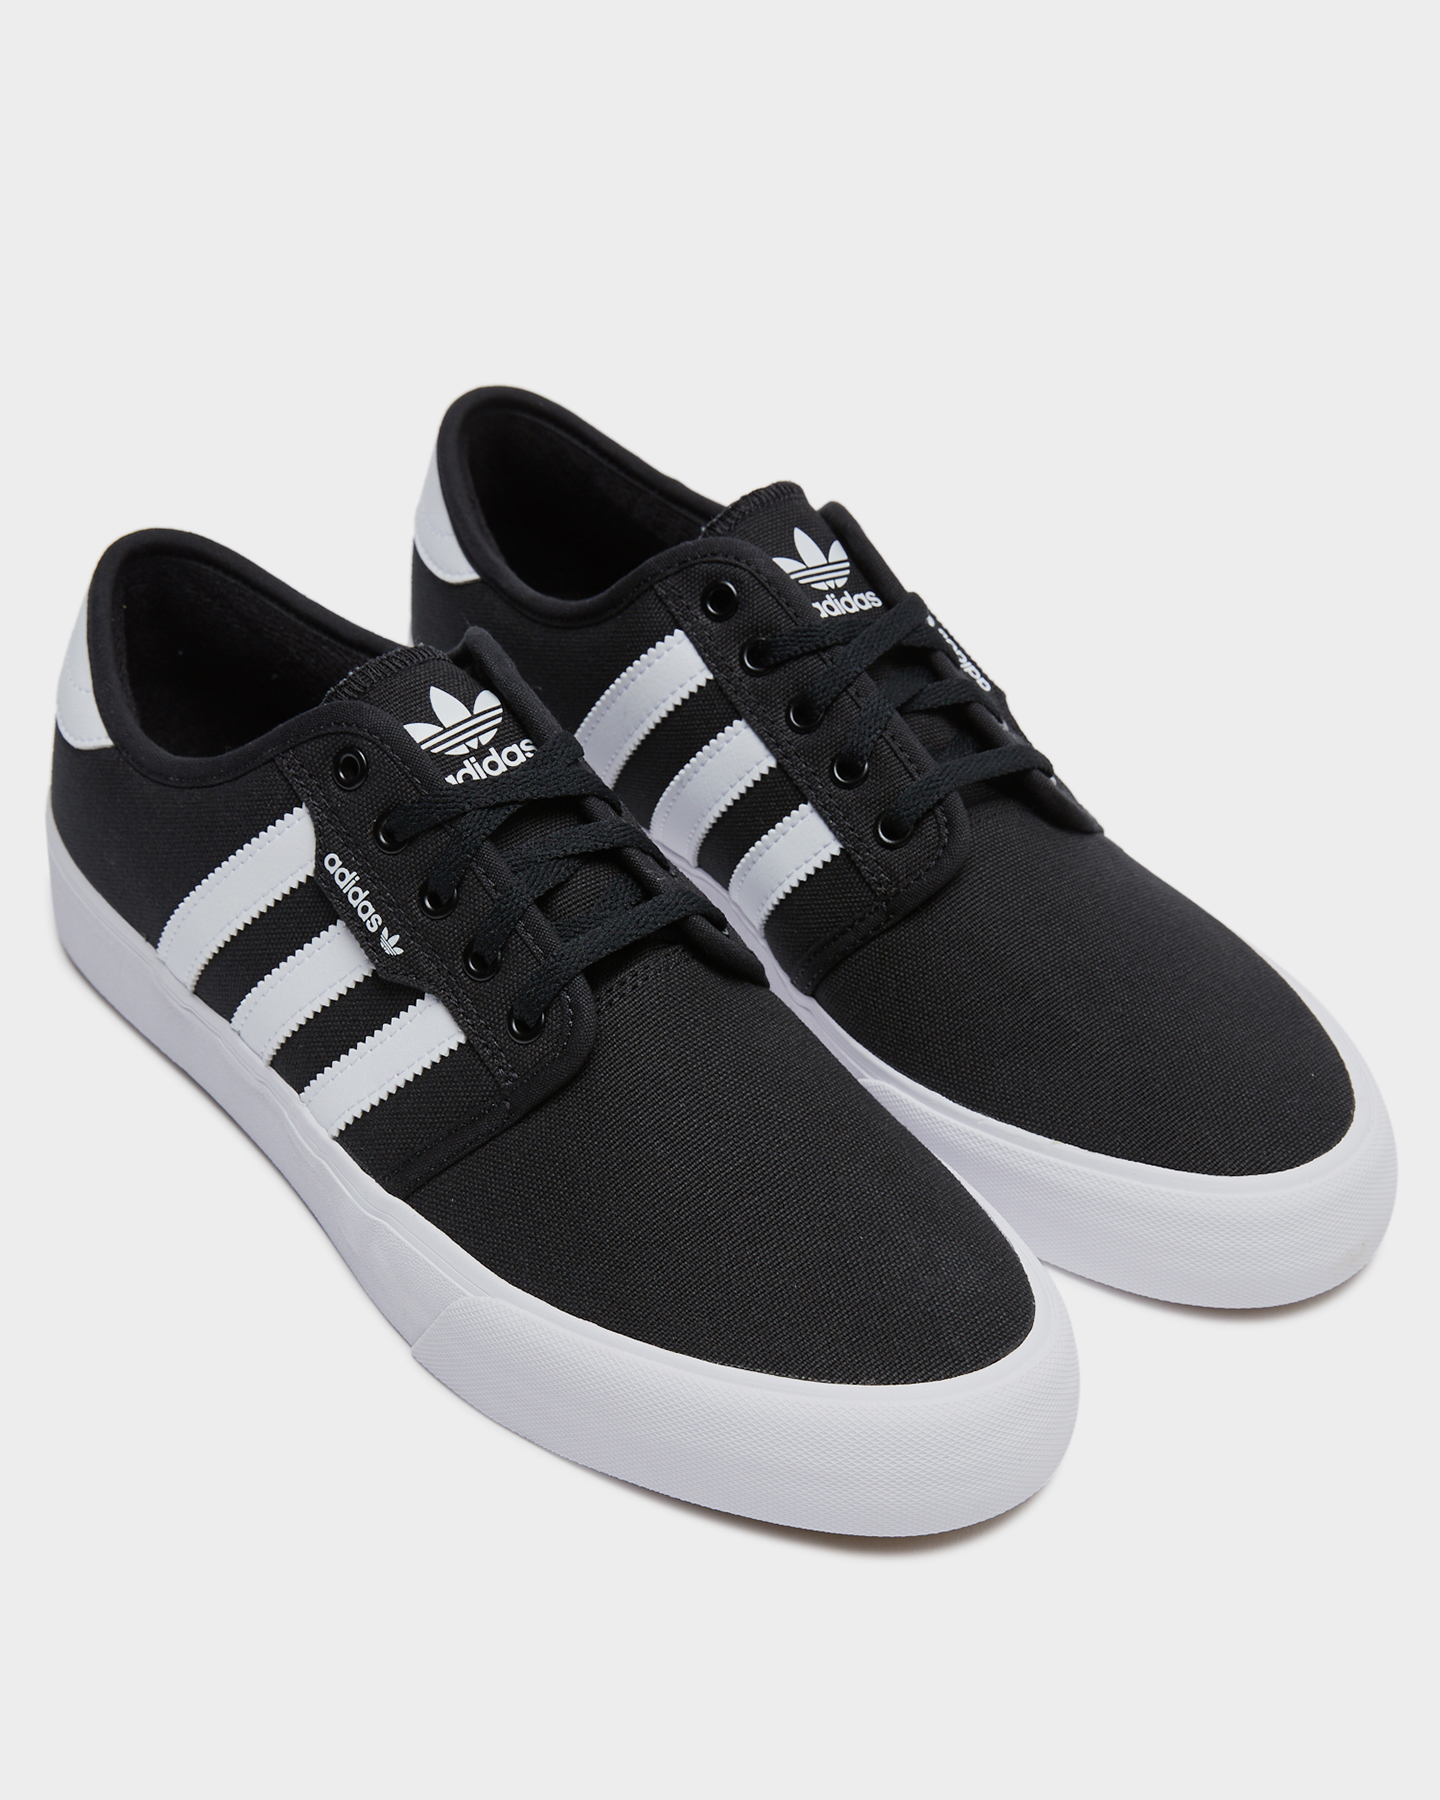 Adidas Seeley Xt Shoe - Core Black White | SurfStitch | Sneaker low